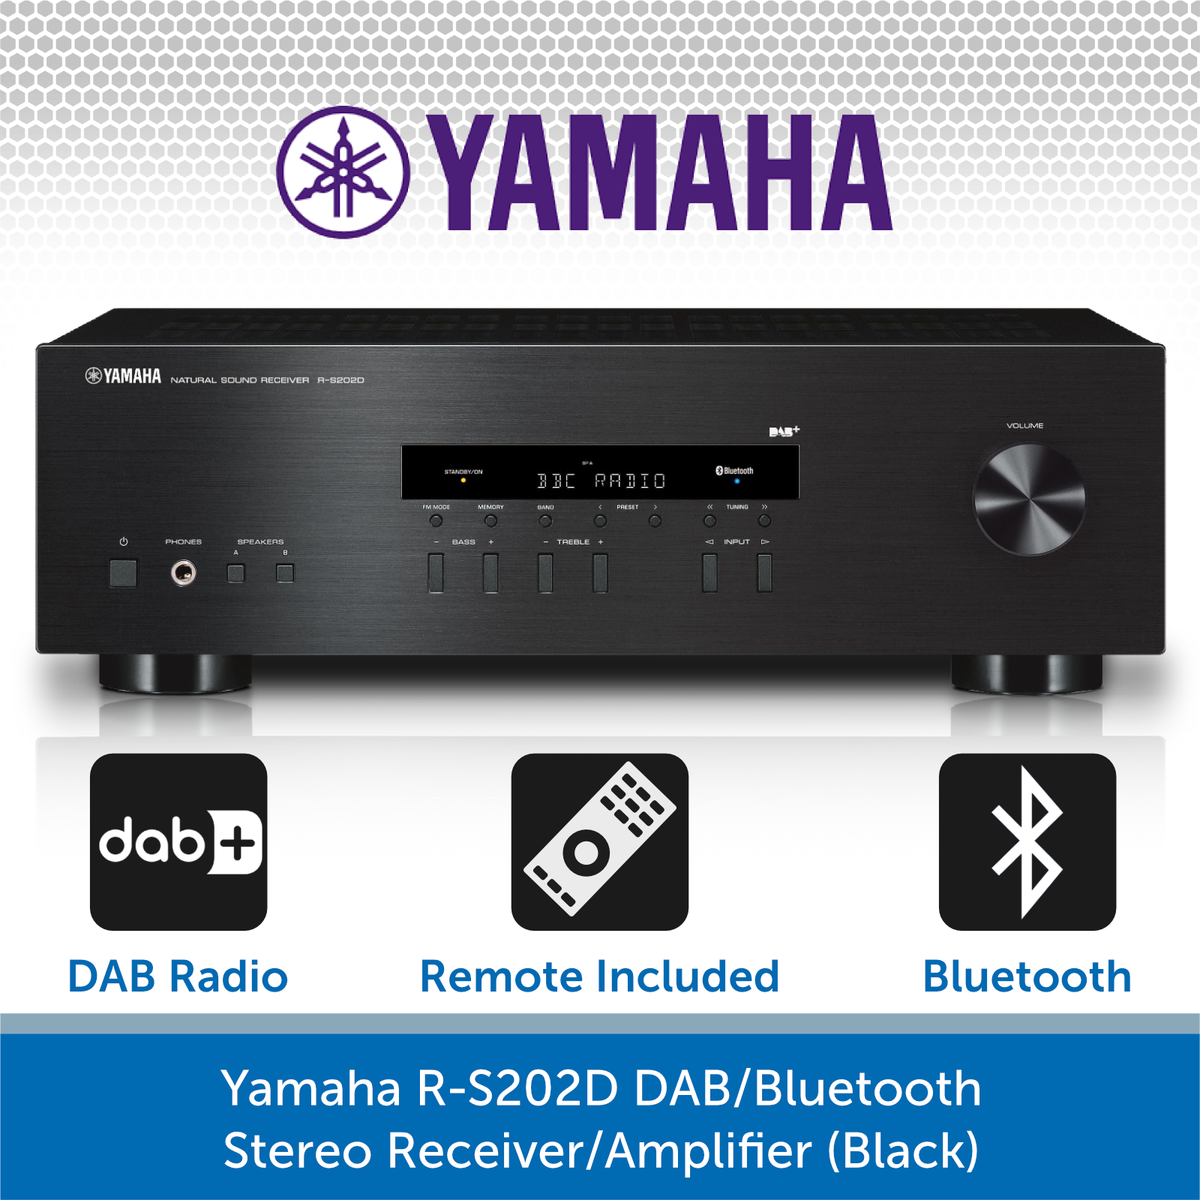 R-S202D DAB/Bluetooth Audio (Black) Receiver Stereo Volt Yamaha |